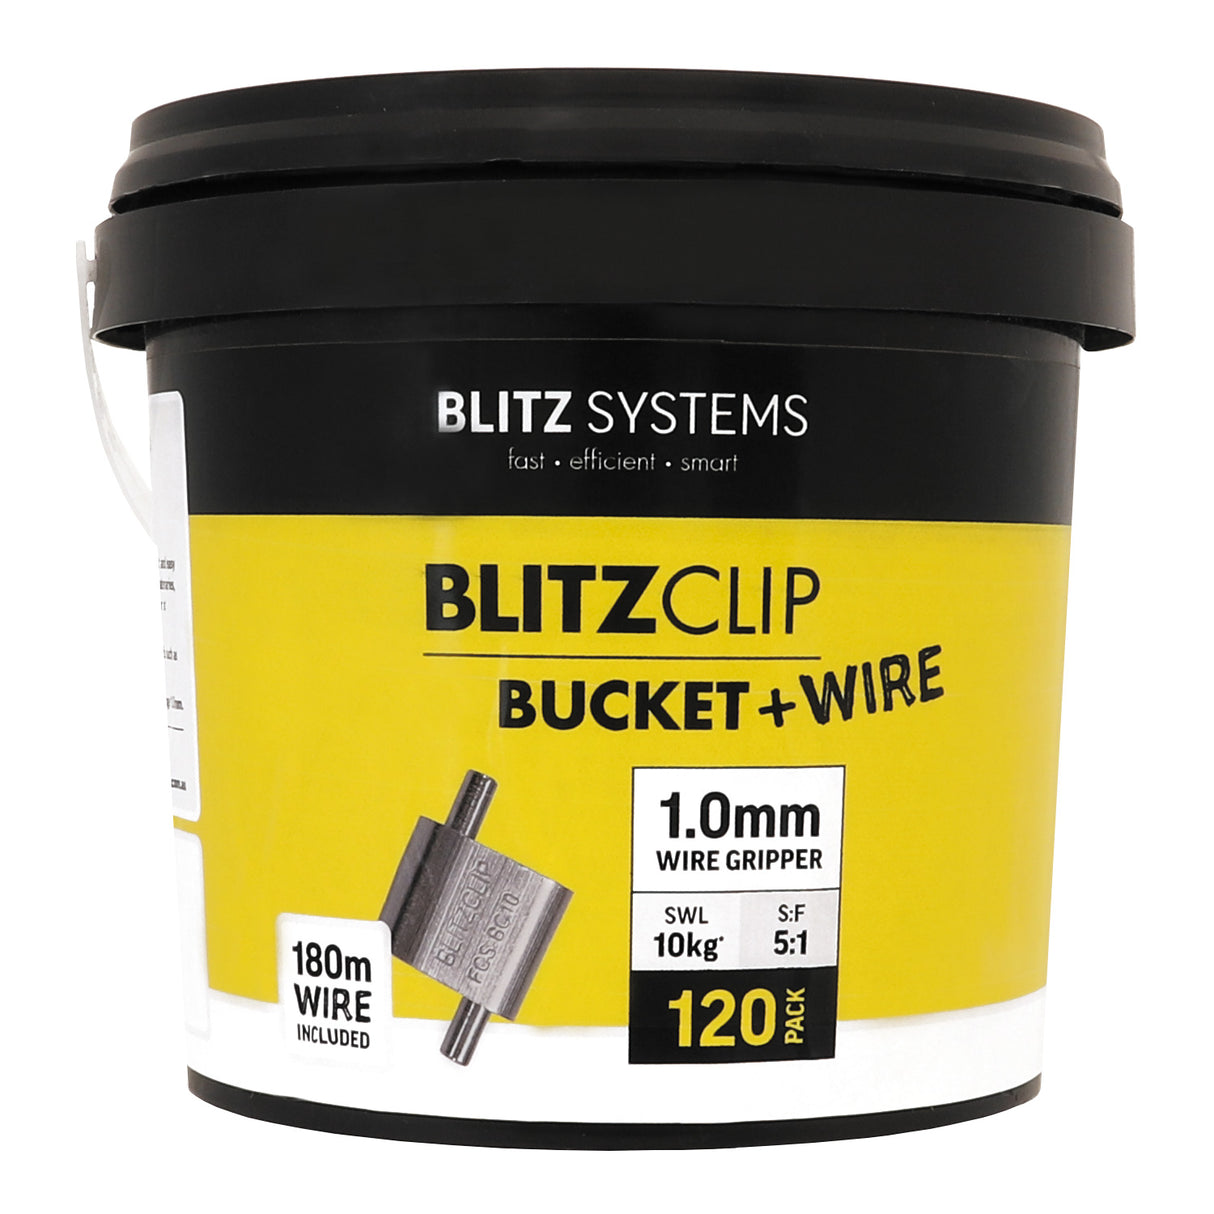 BLITZCLIP Bucket - 1.0mm Wire Gripper x 120 Pcs + Wire 1.0x180M